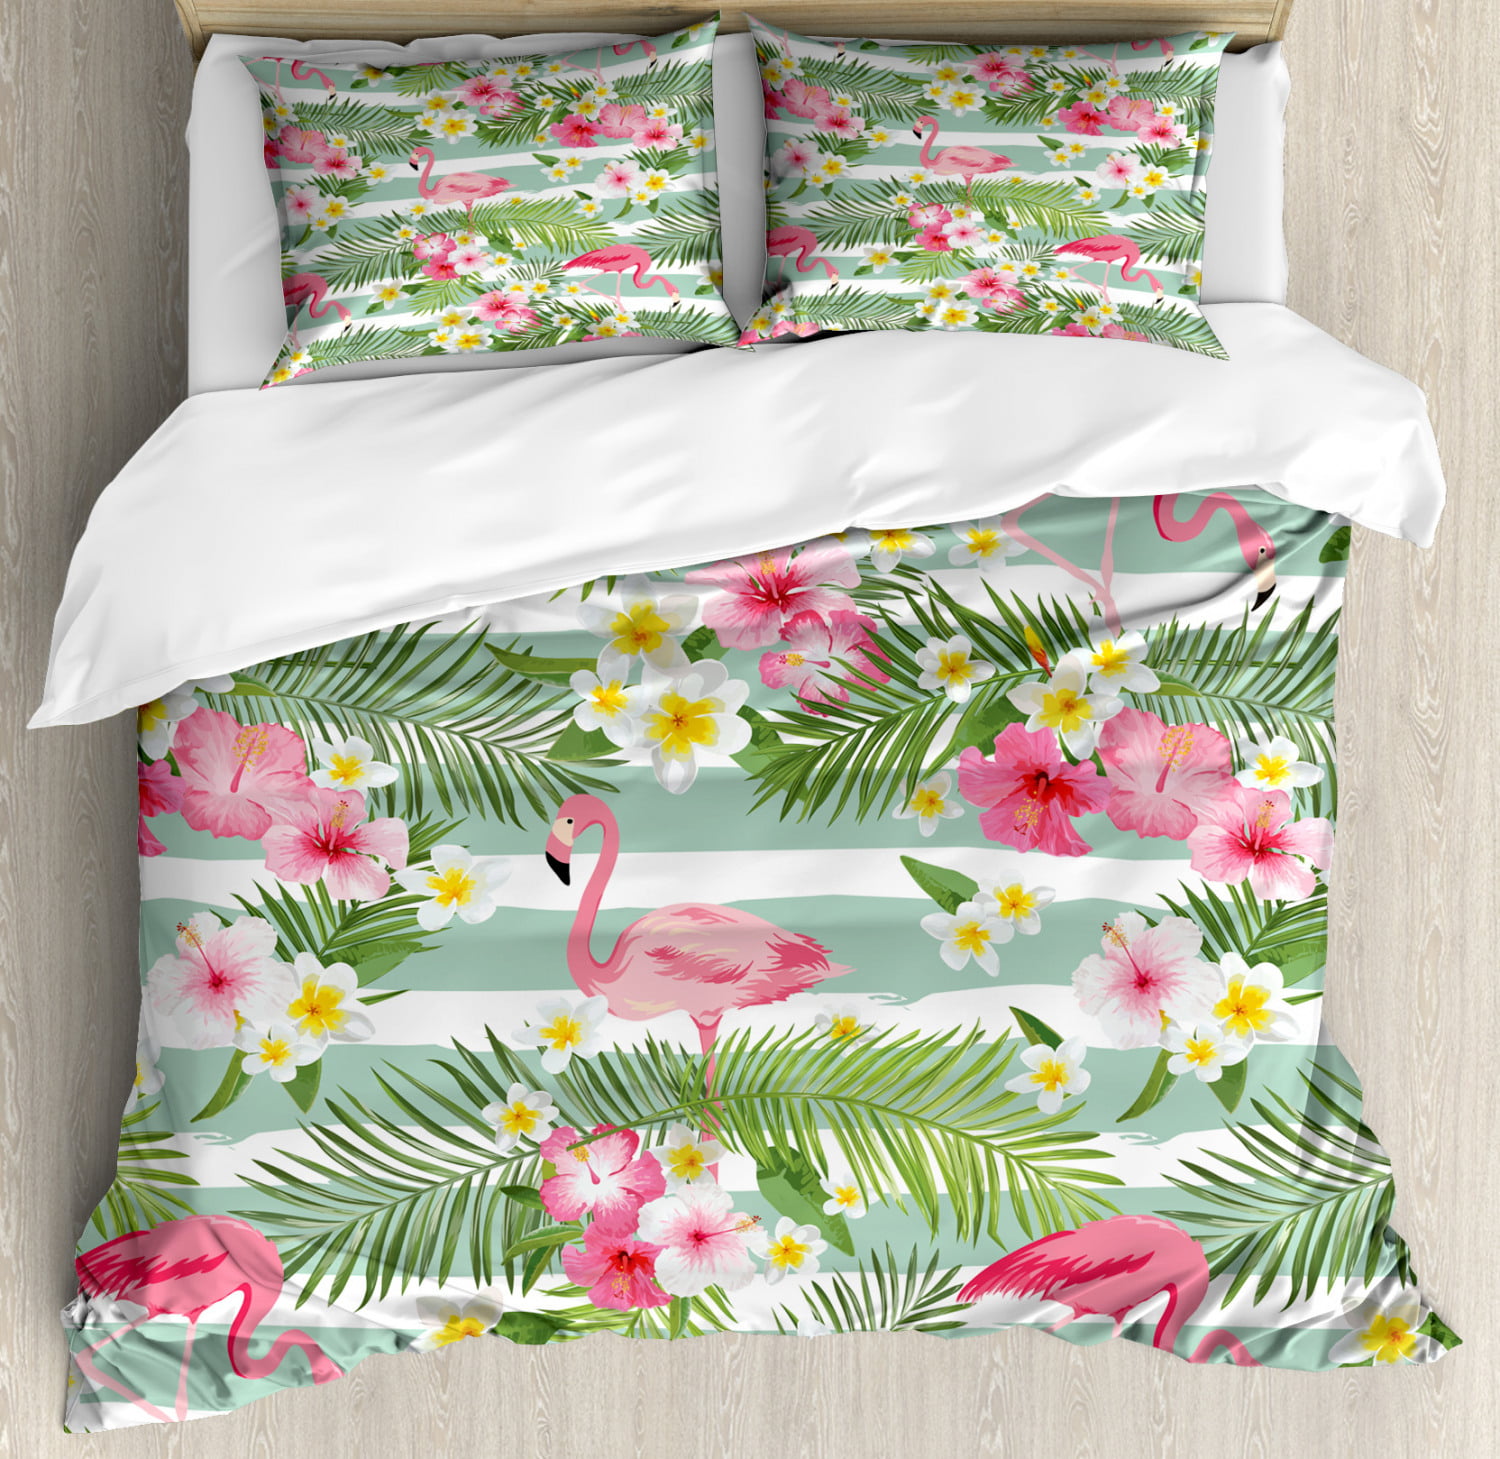 Leaves & Flamingo Print Duvet Cover Bedding Sets Kids Girls Flat Sheet Bed Linen 